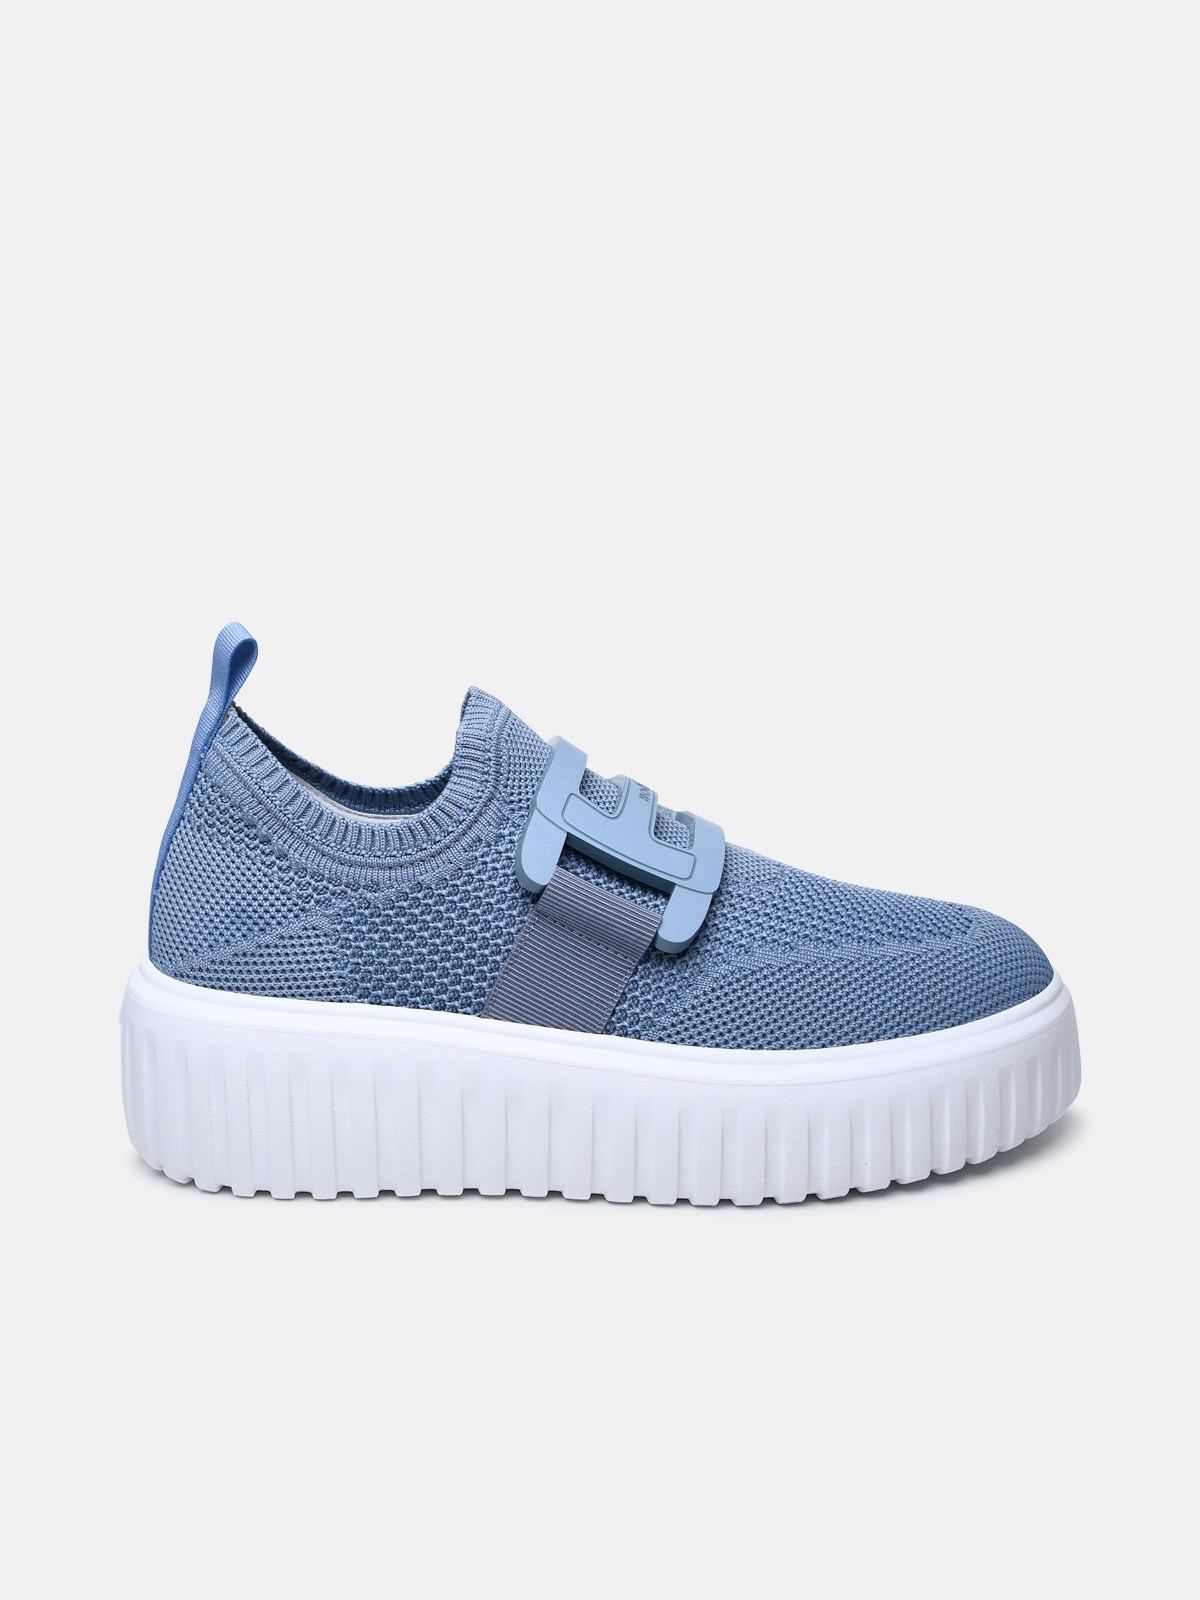 Hogan Sneakers In Light Blue Fabric